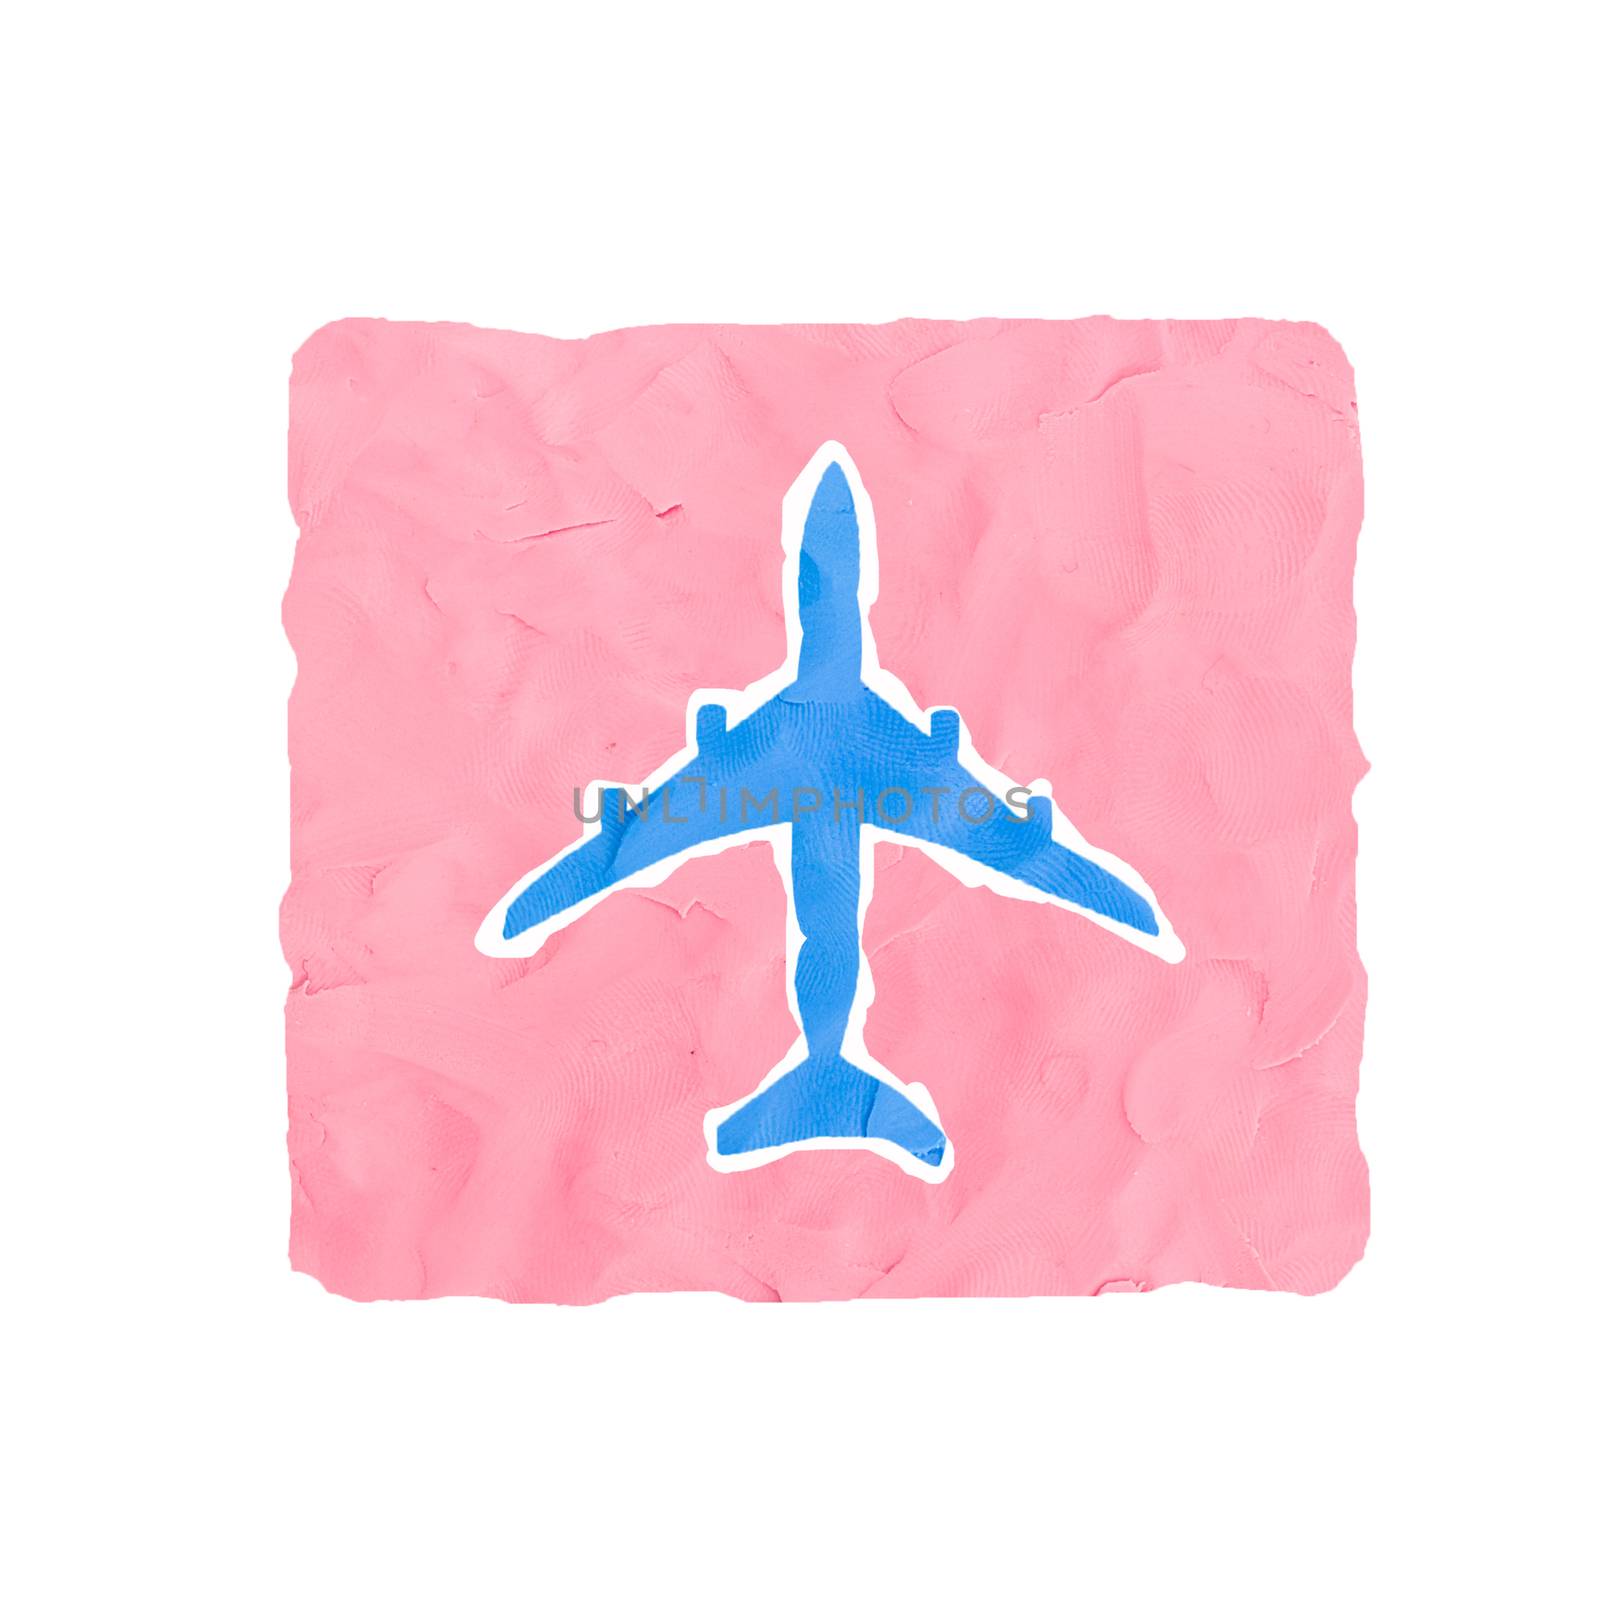 Airplane icon handmade isolated on white background by tisskananat